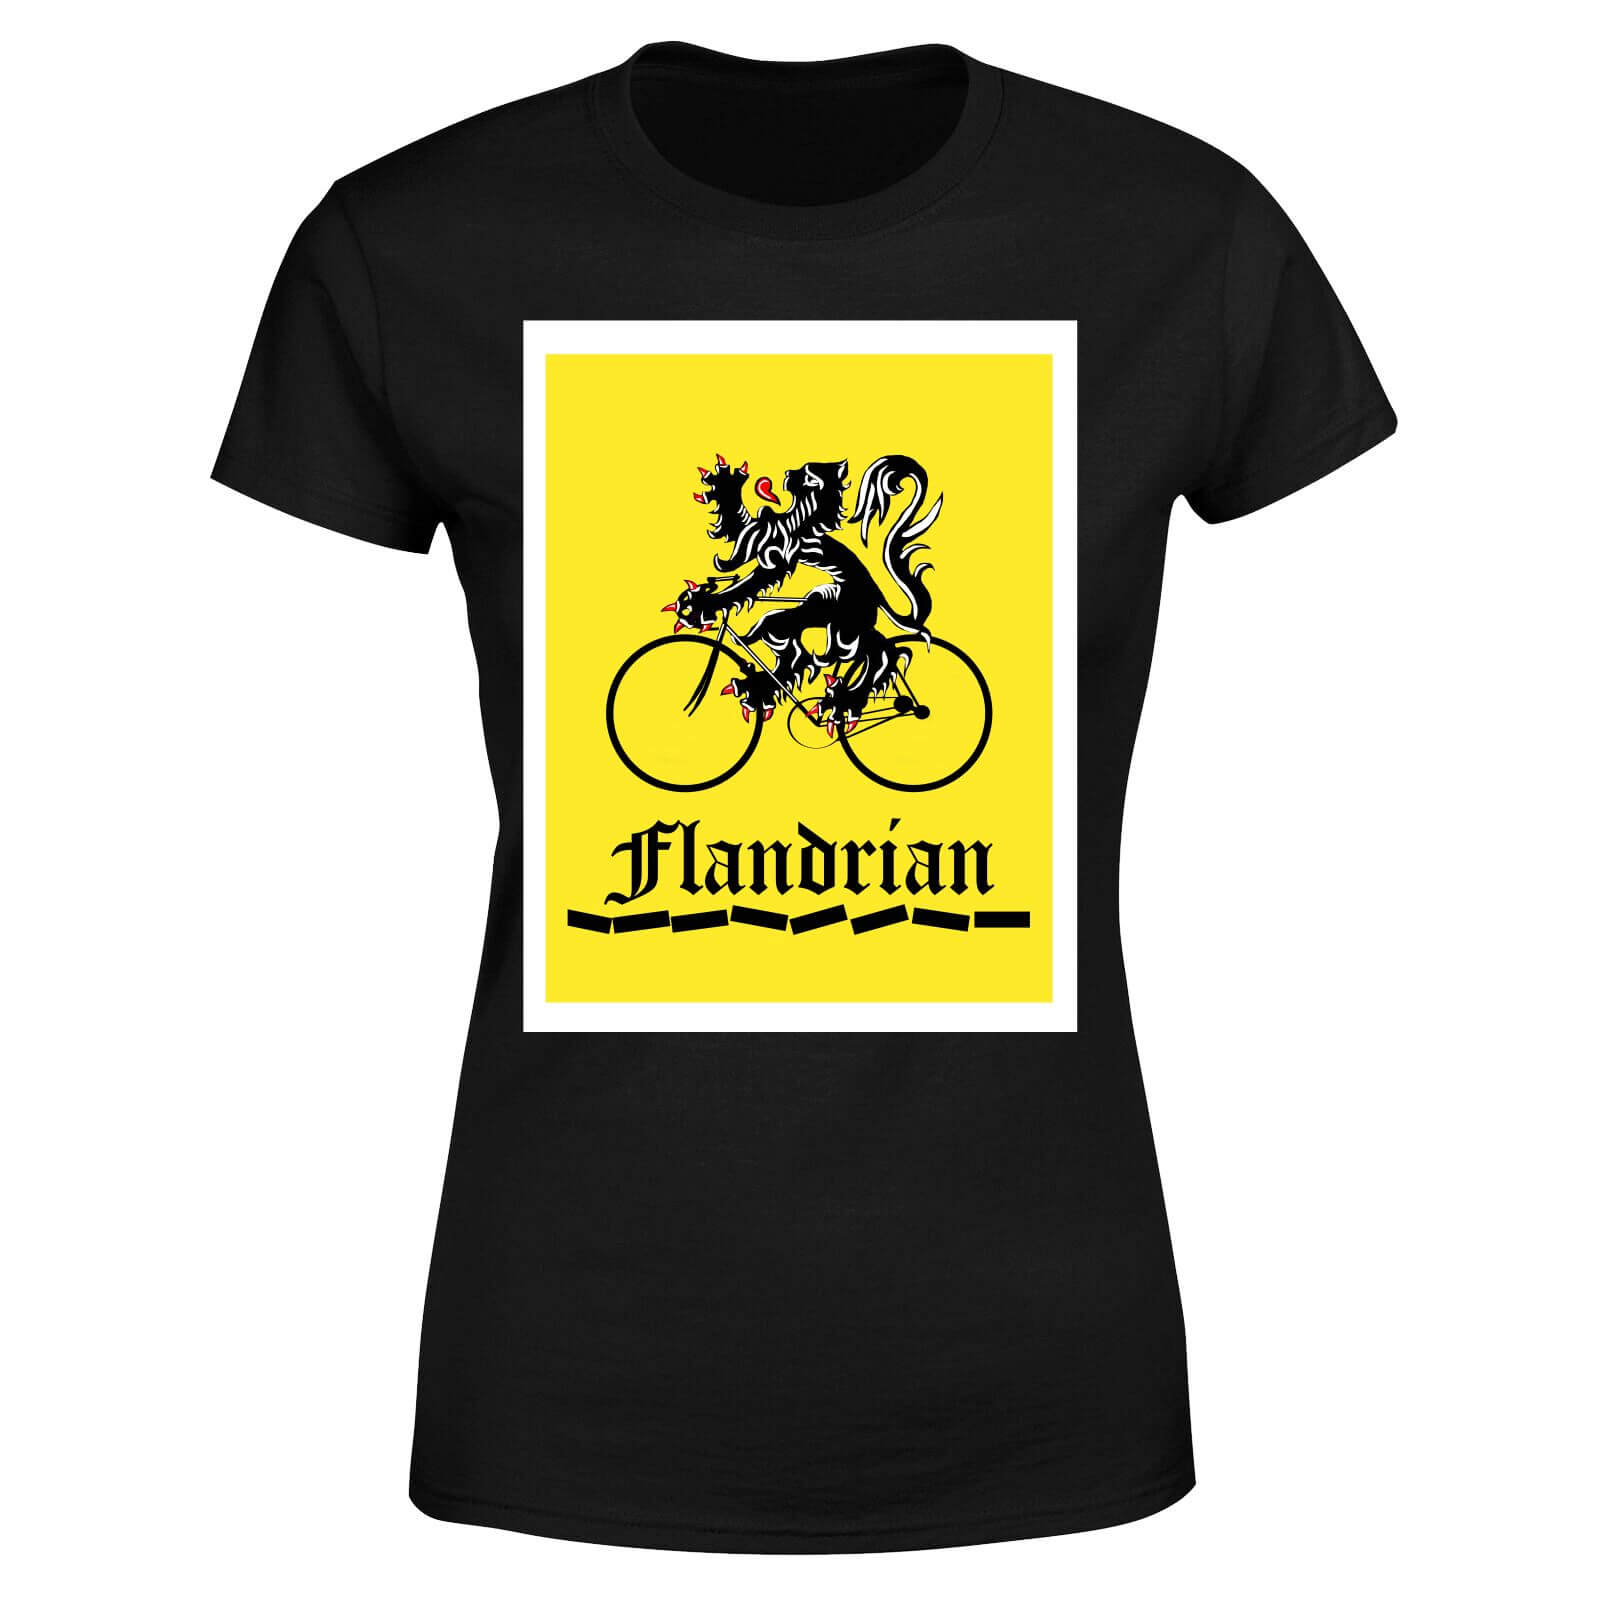 Flandrian Women's T-Shirt - Black - XL - Black